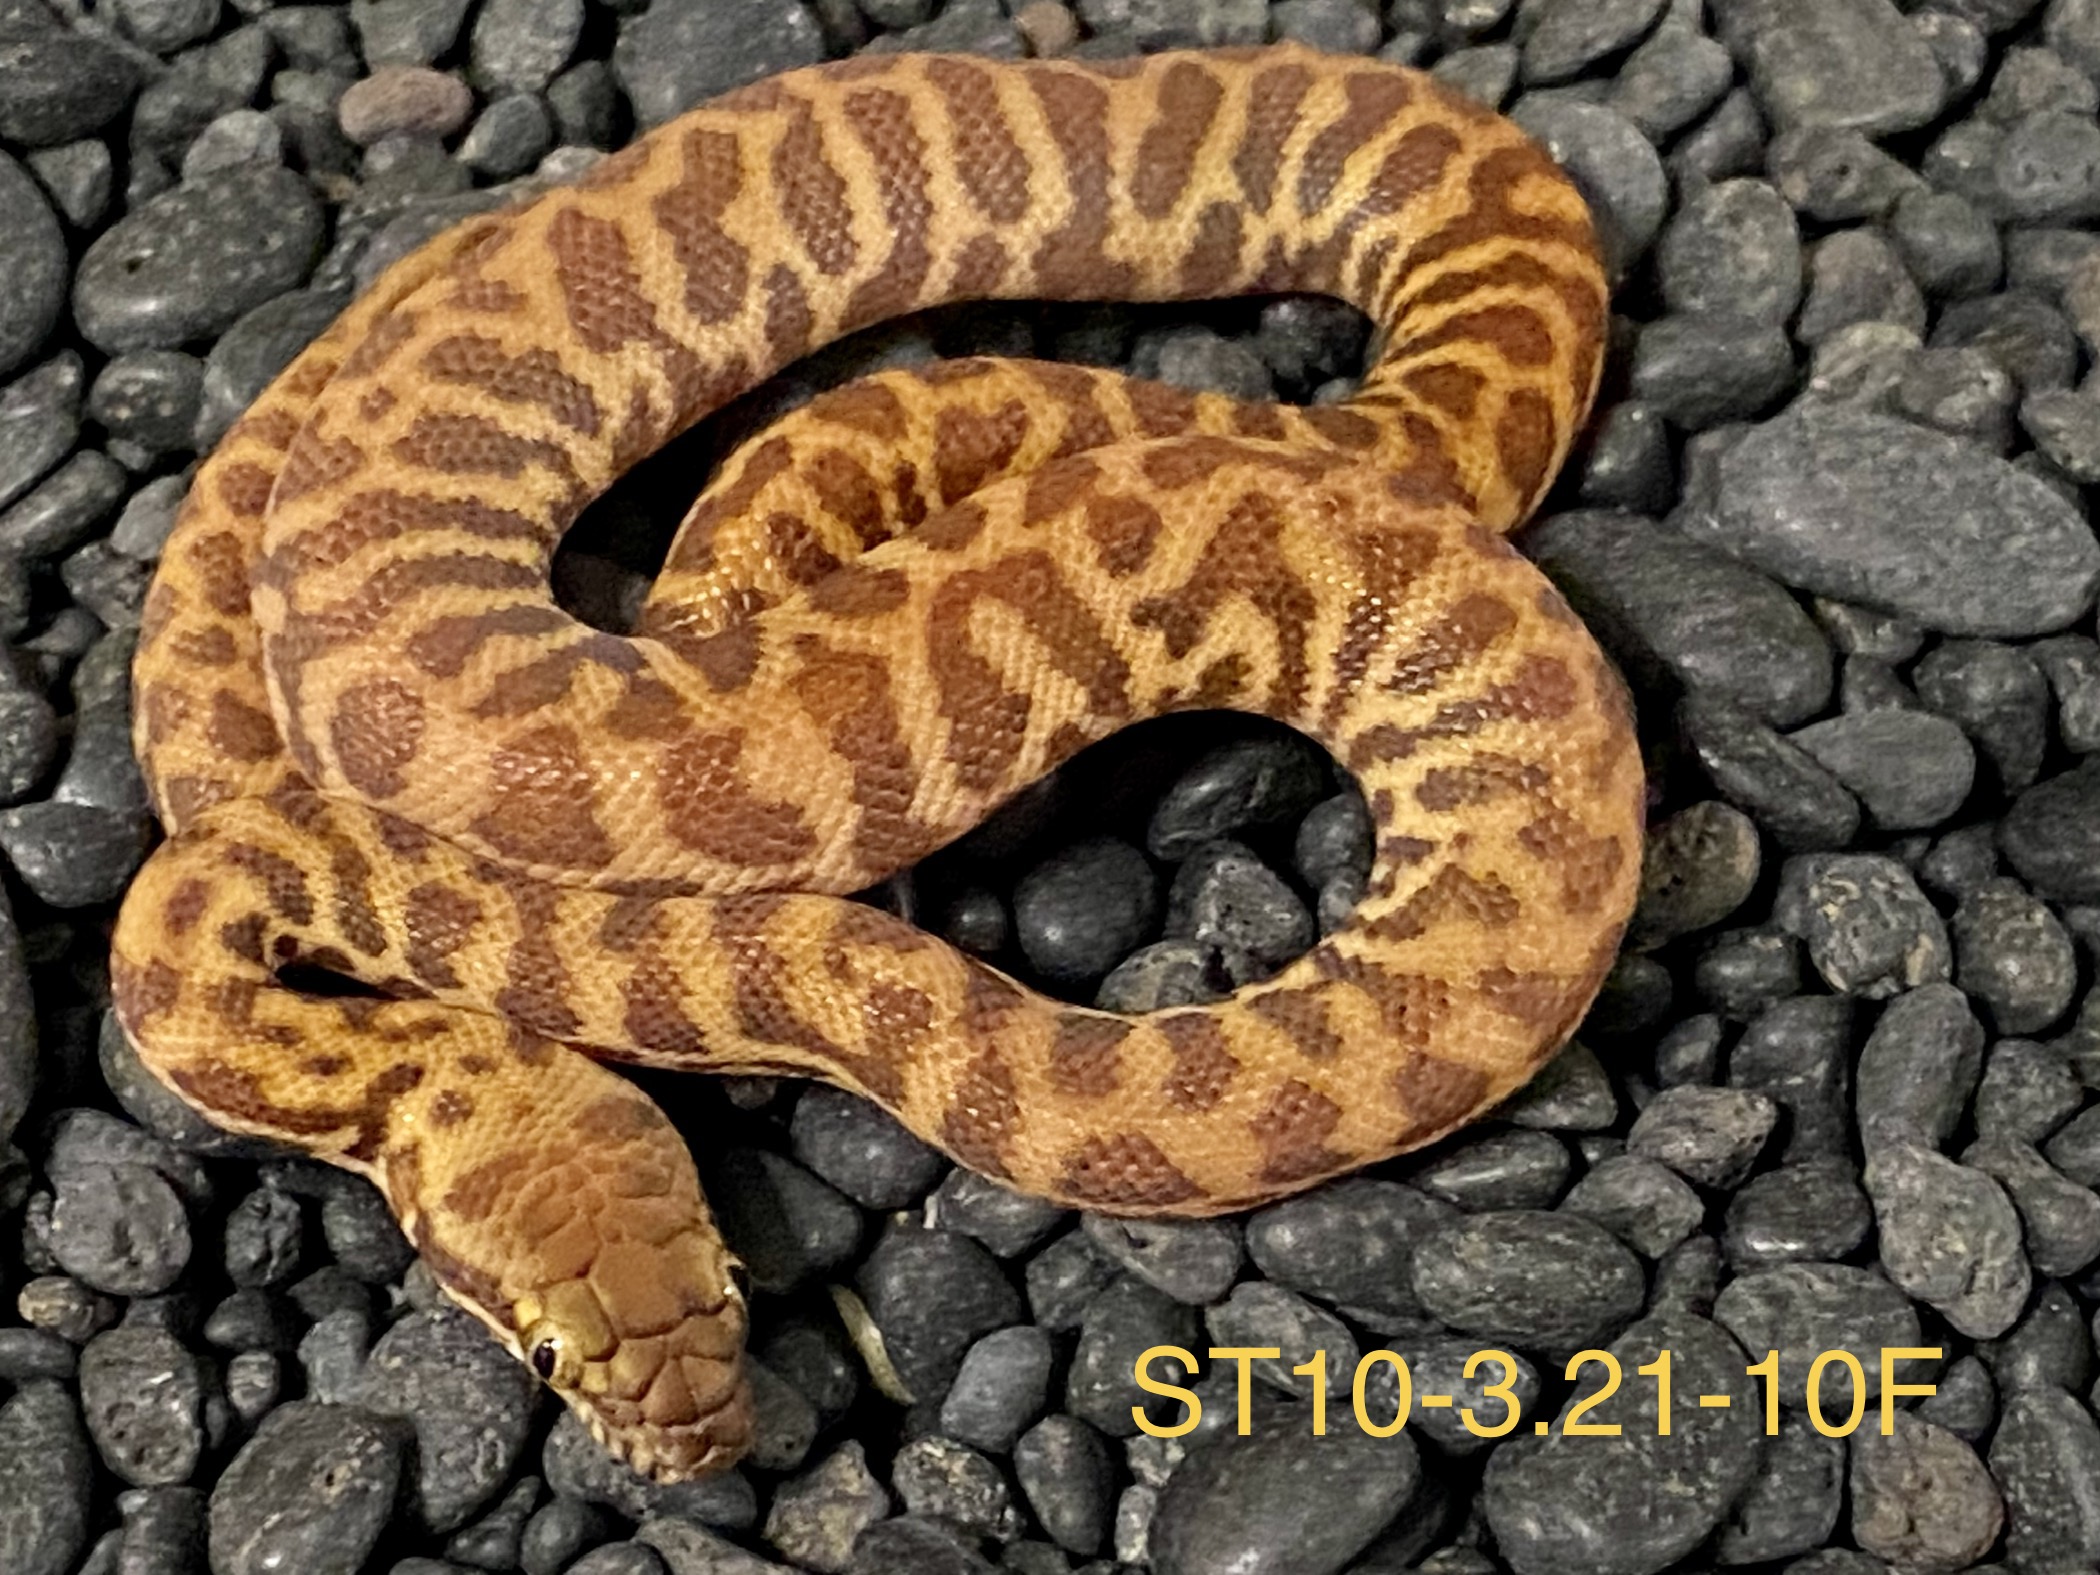 Eastern Stimson's python